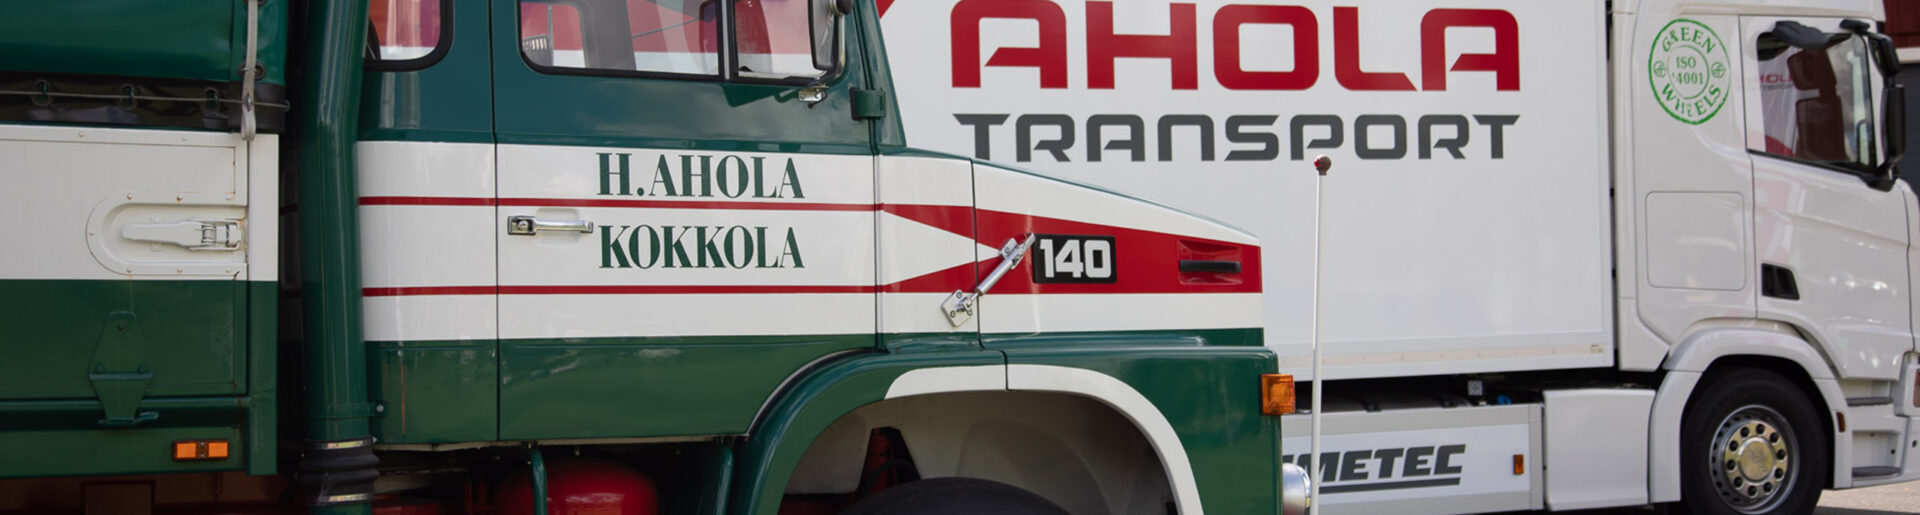 Ahola history through different trucks